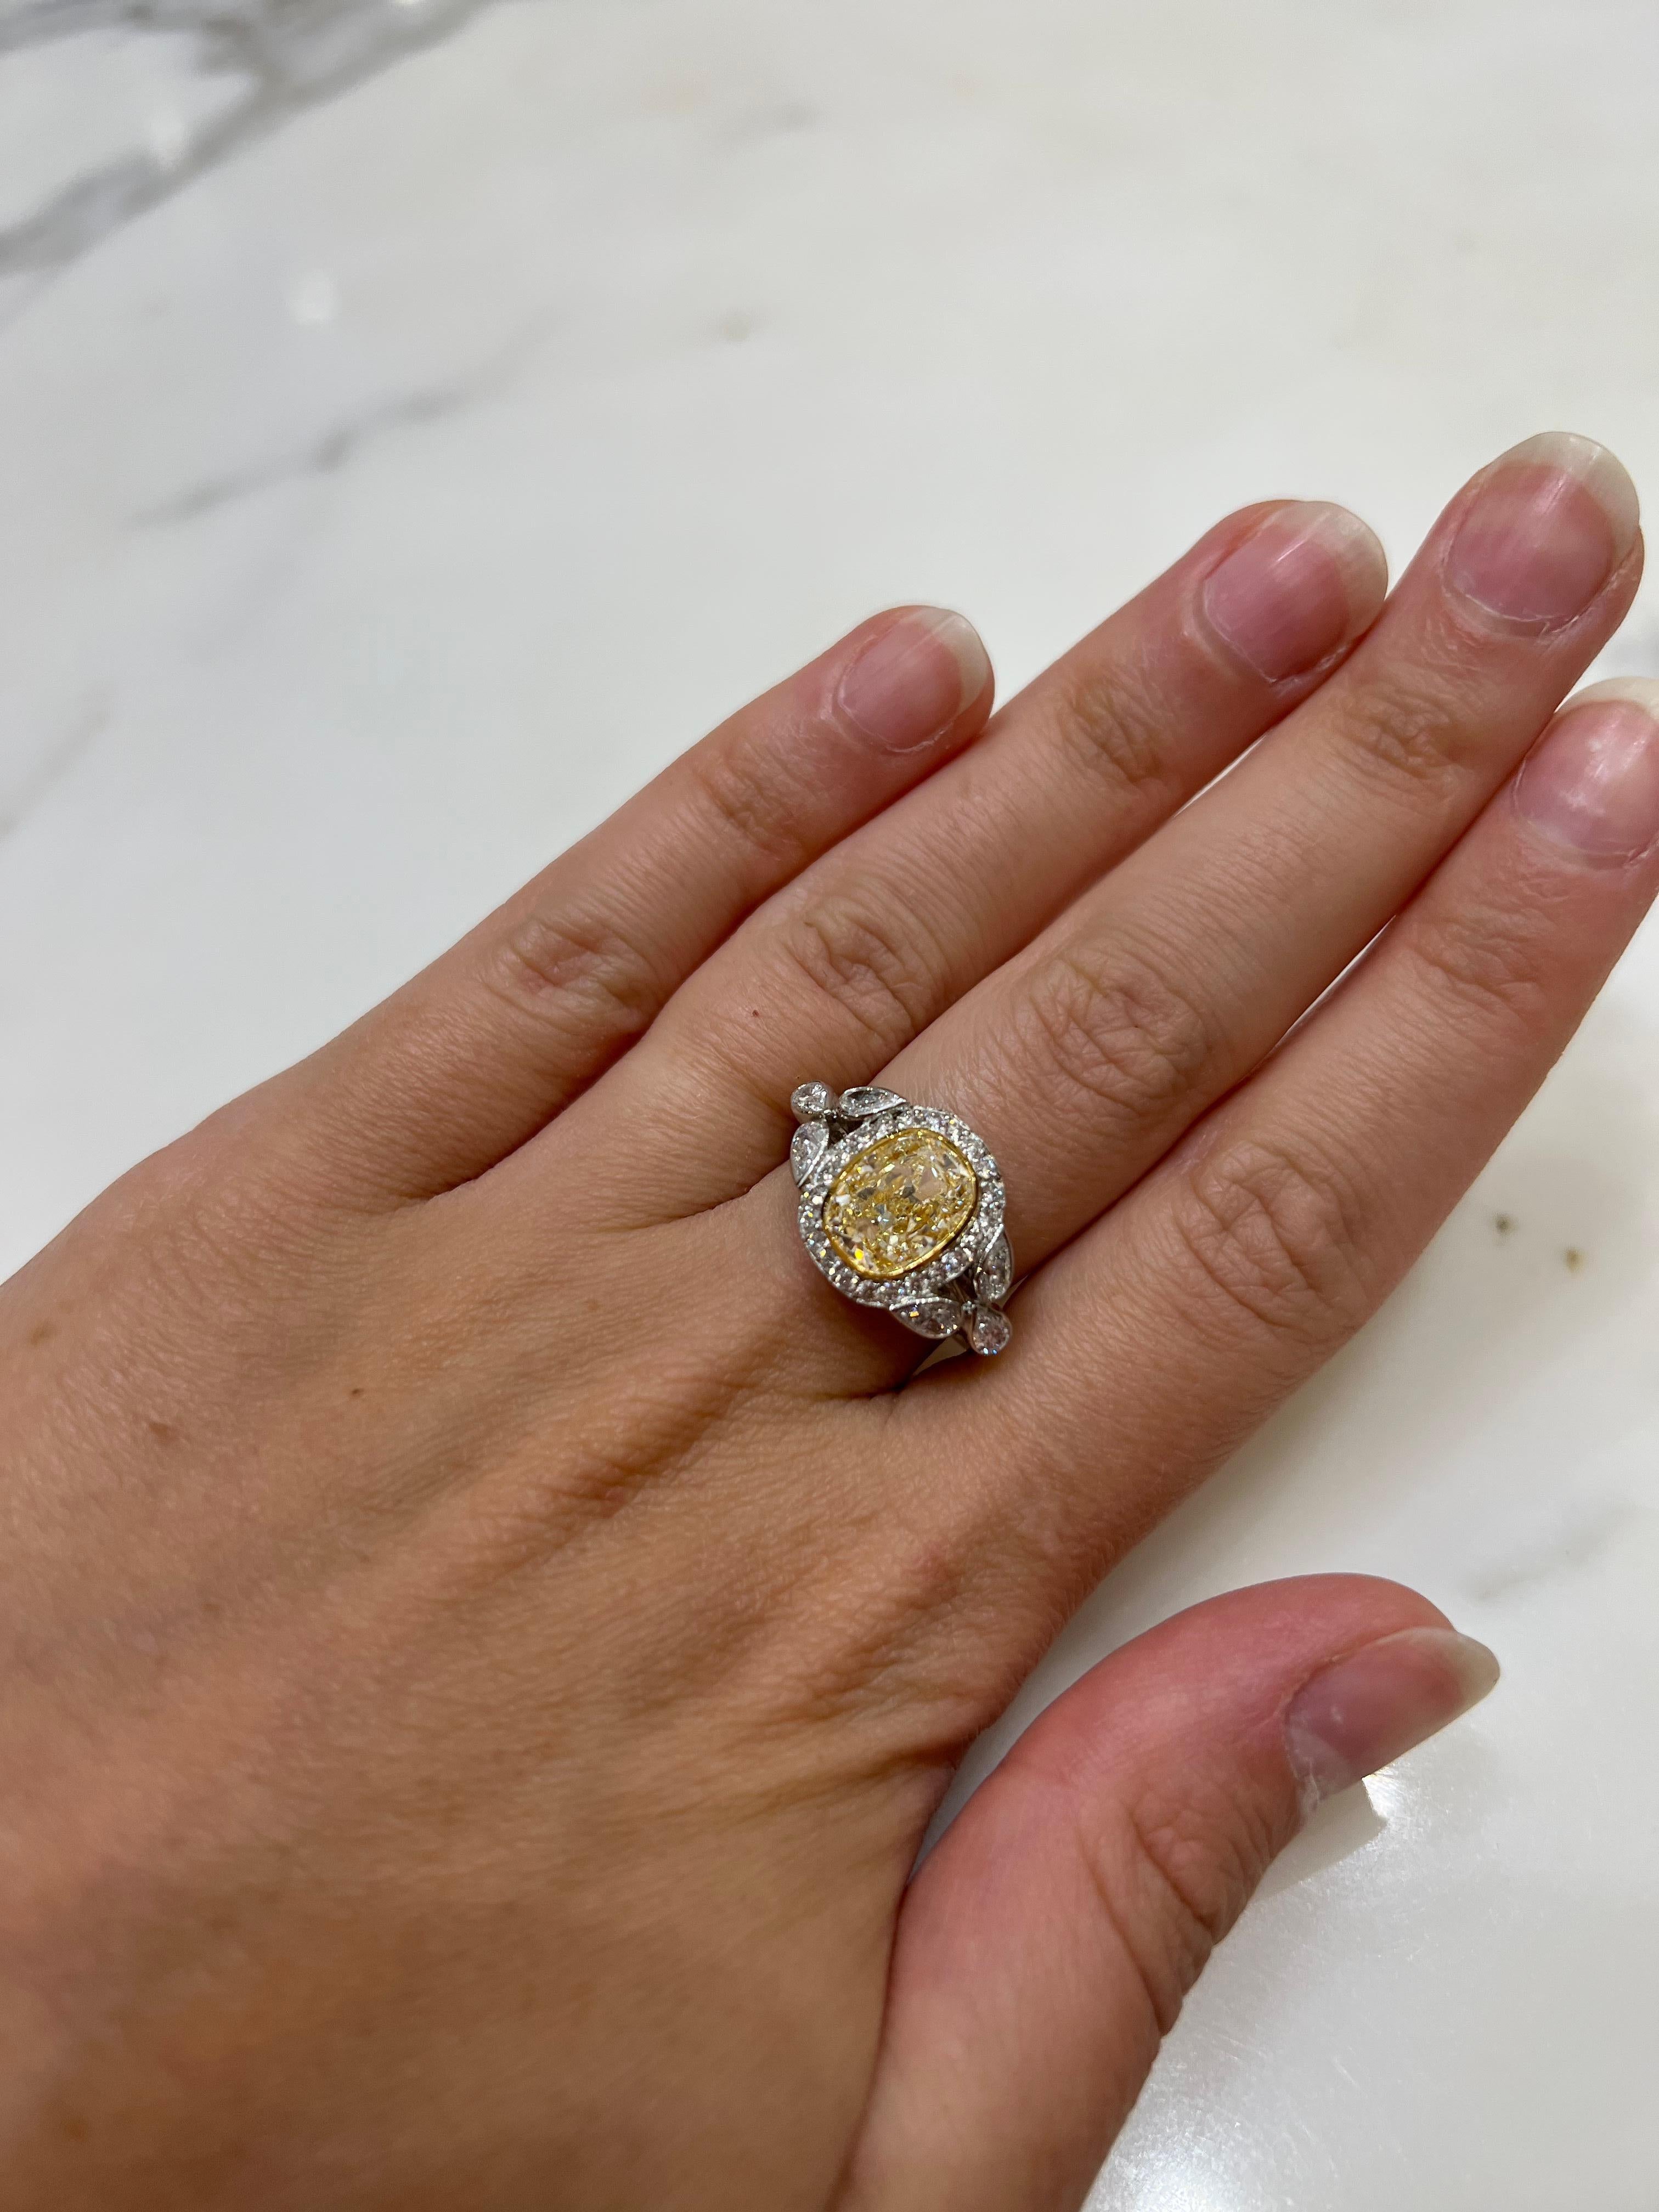 4.38 carat yellow diamond worth